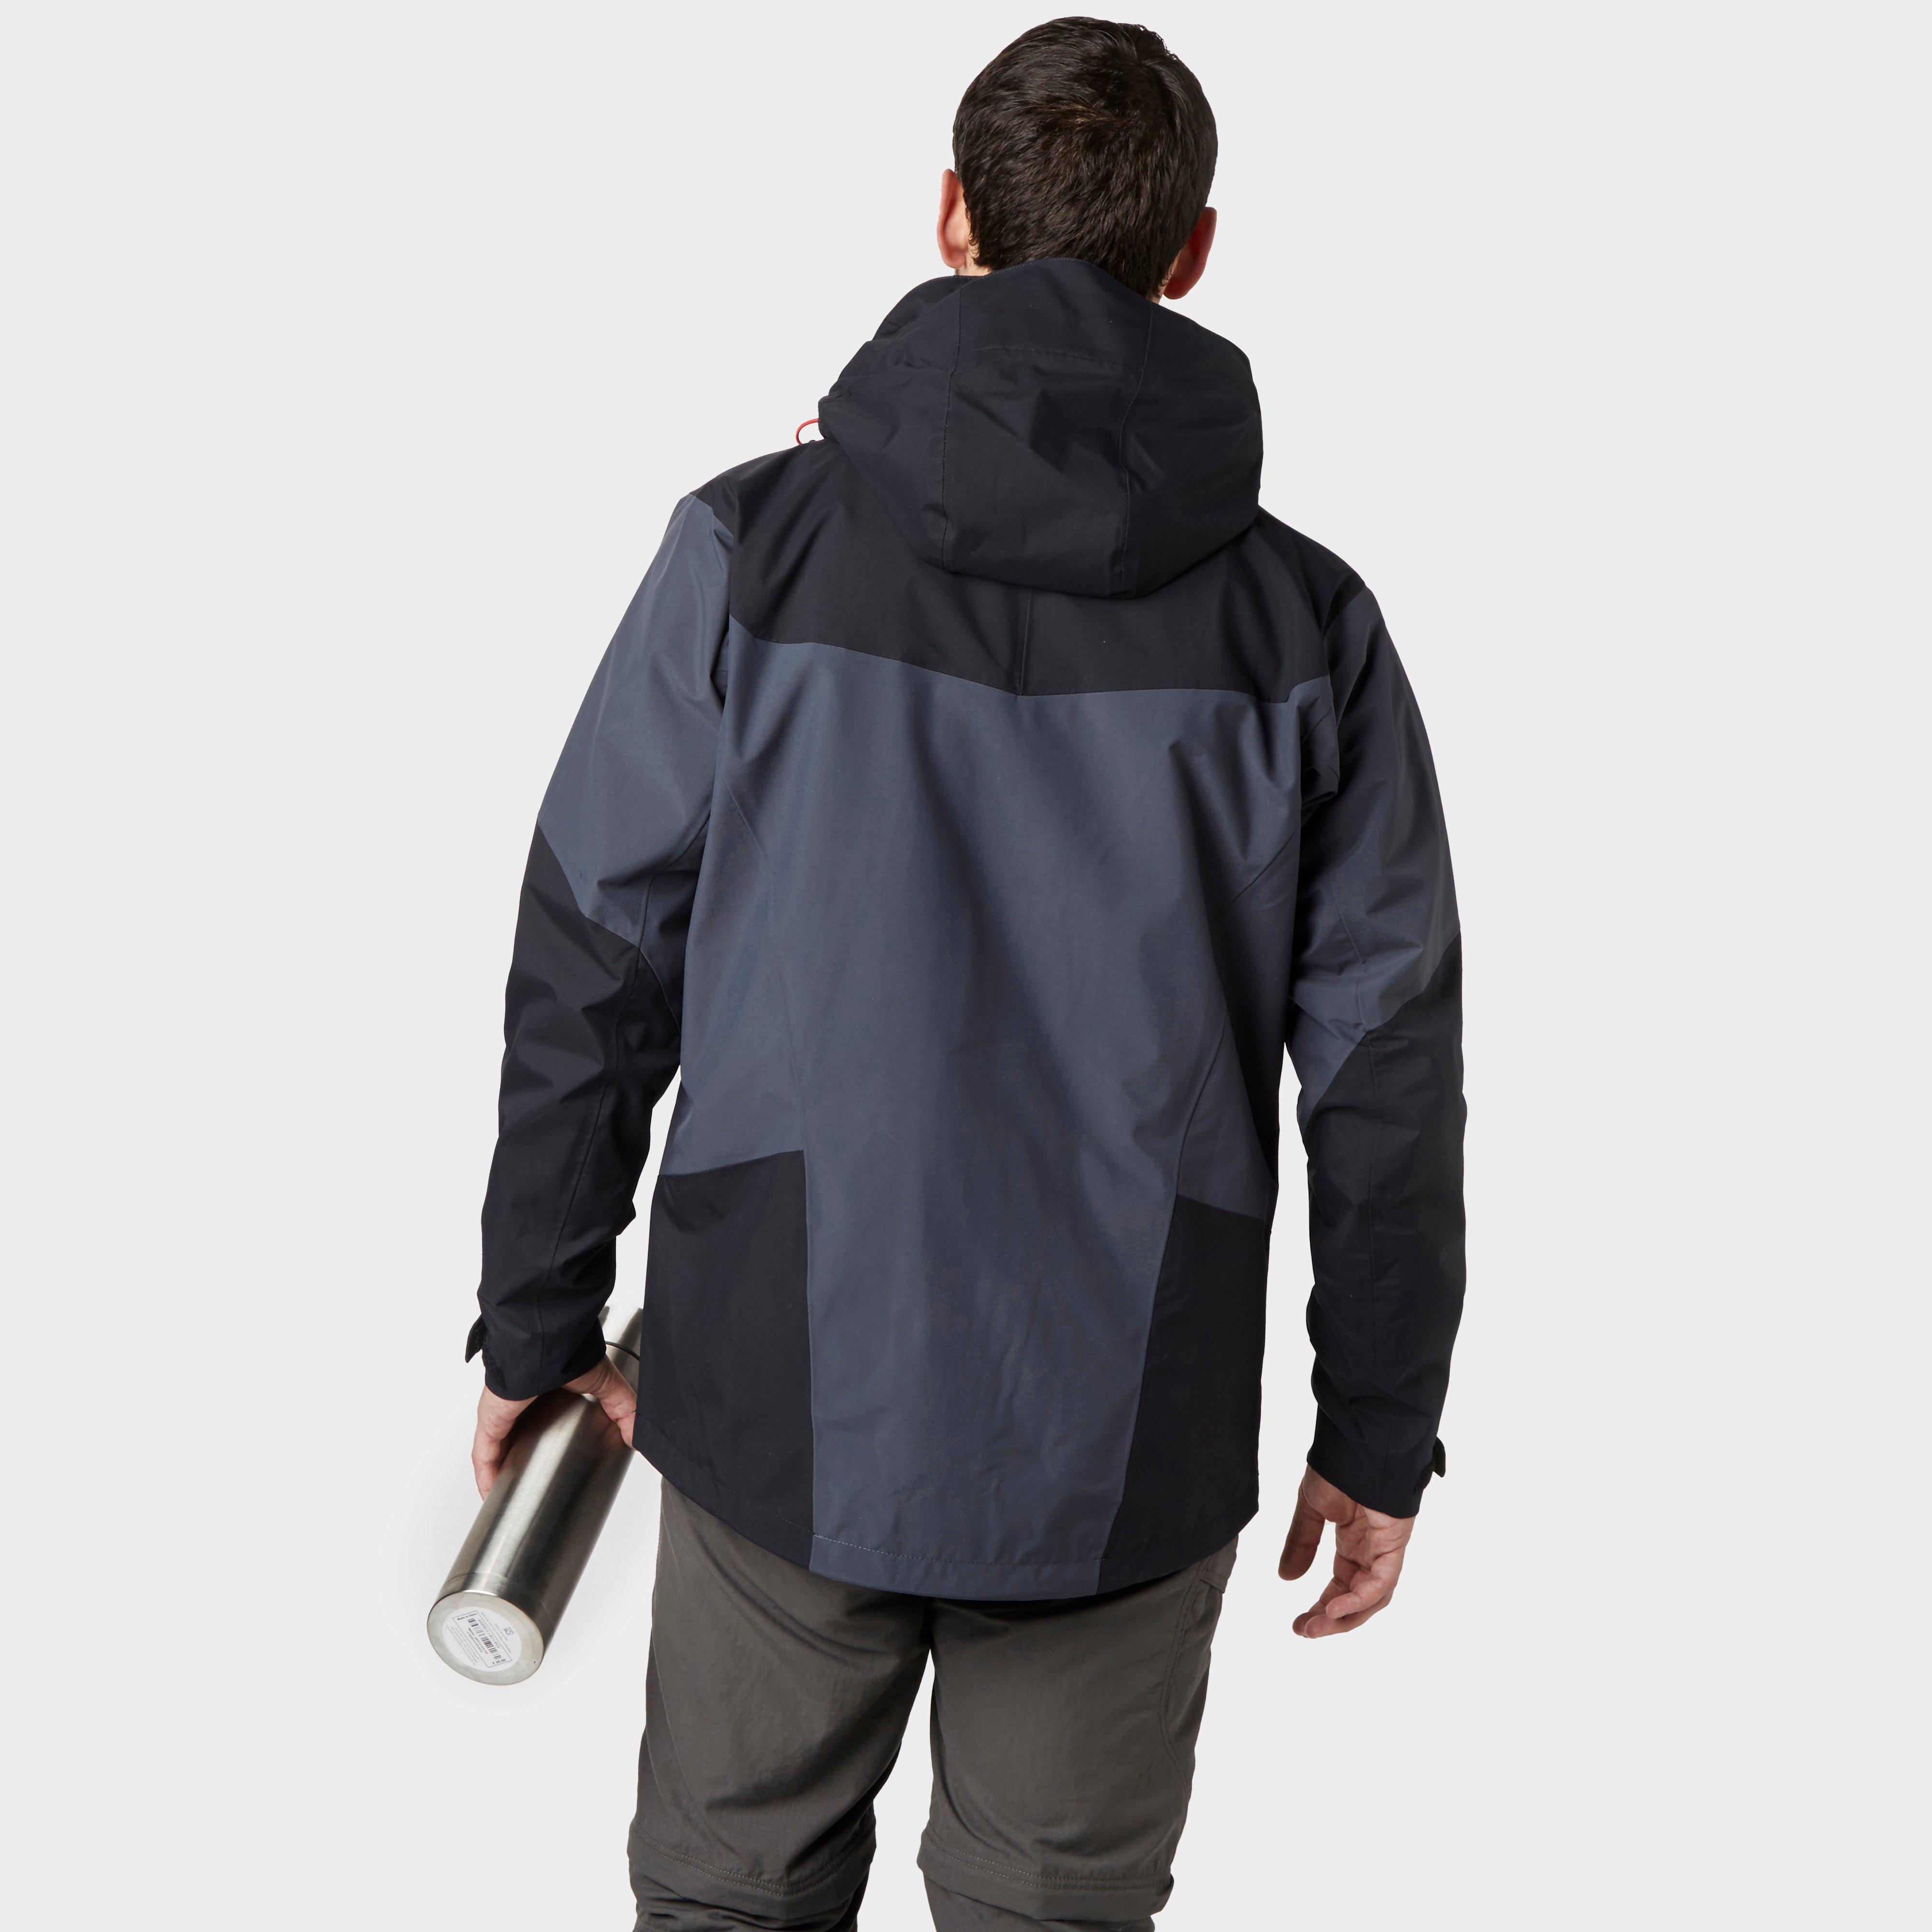 Berghaus Men's Arran Waterproof Jacket Review